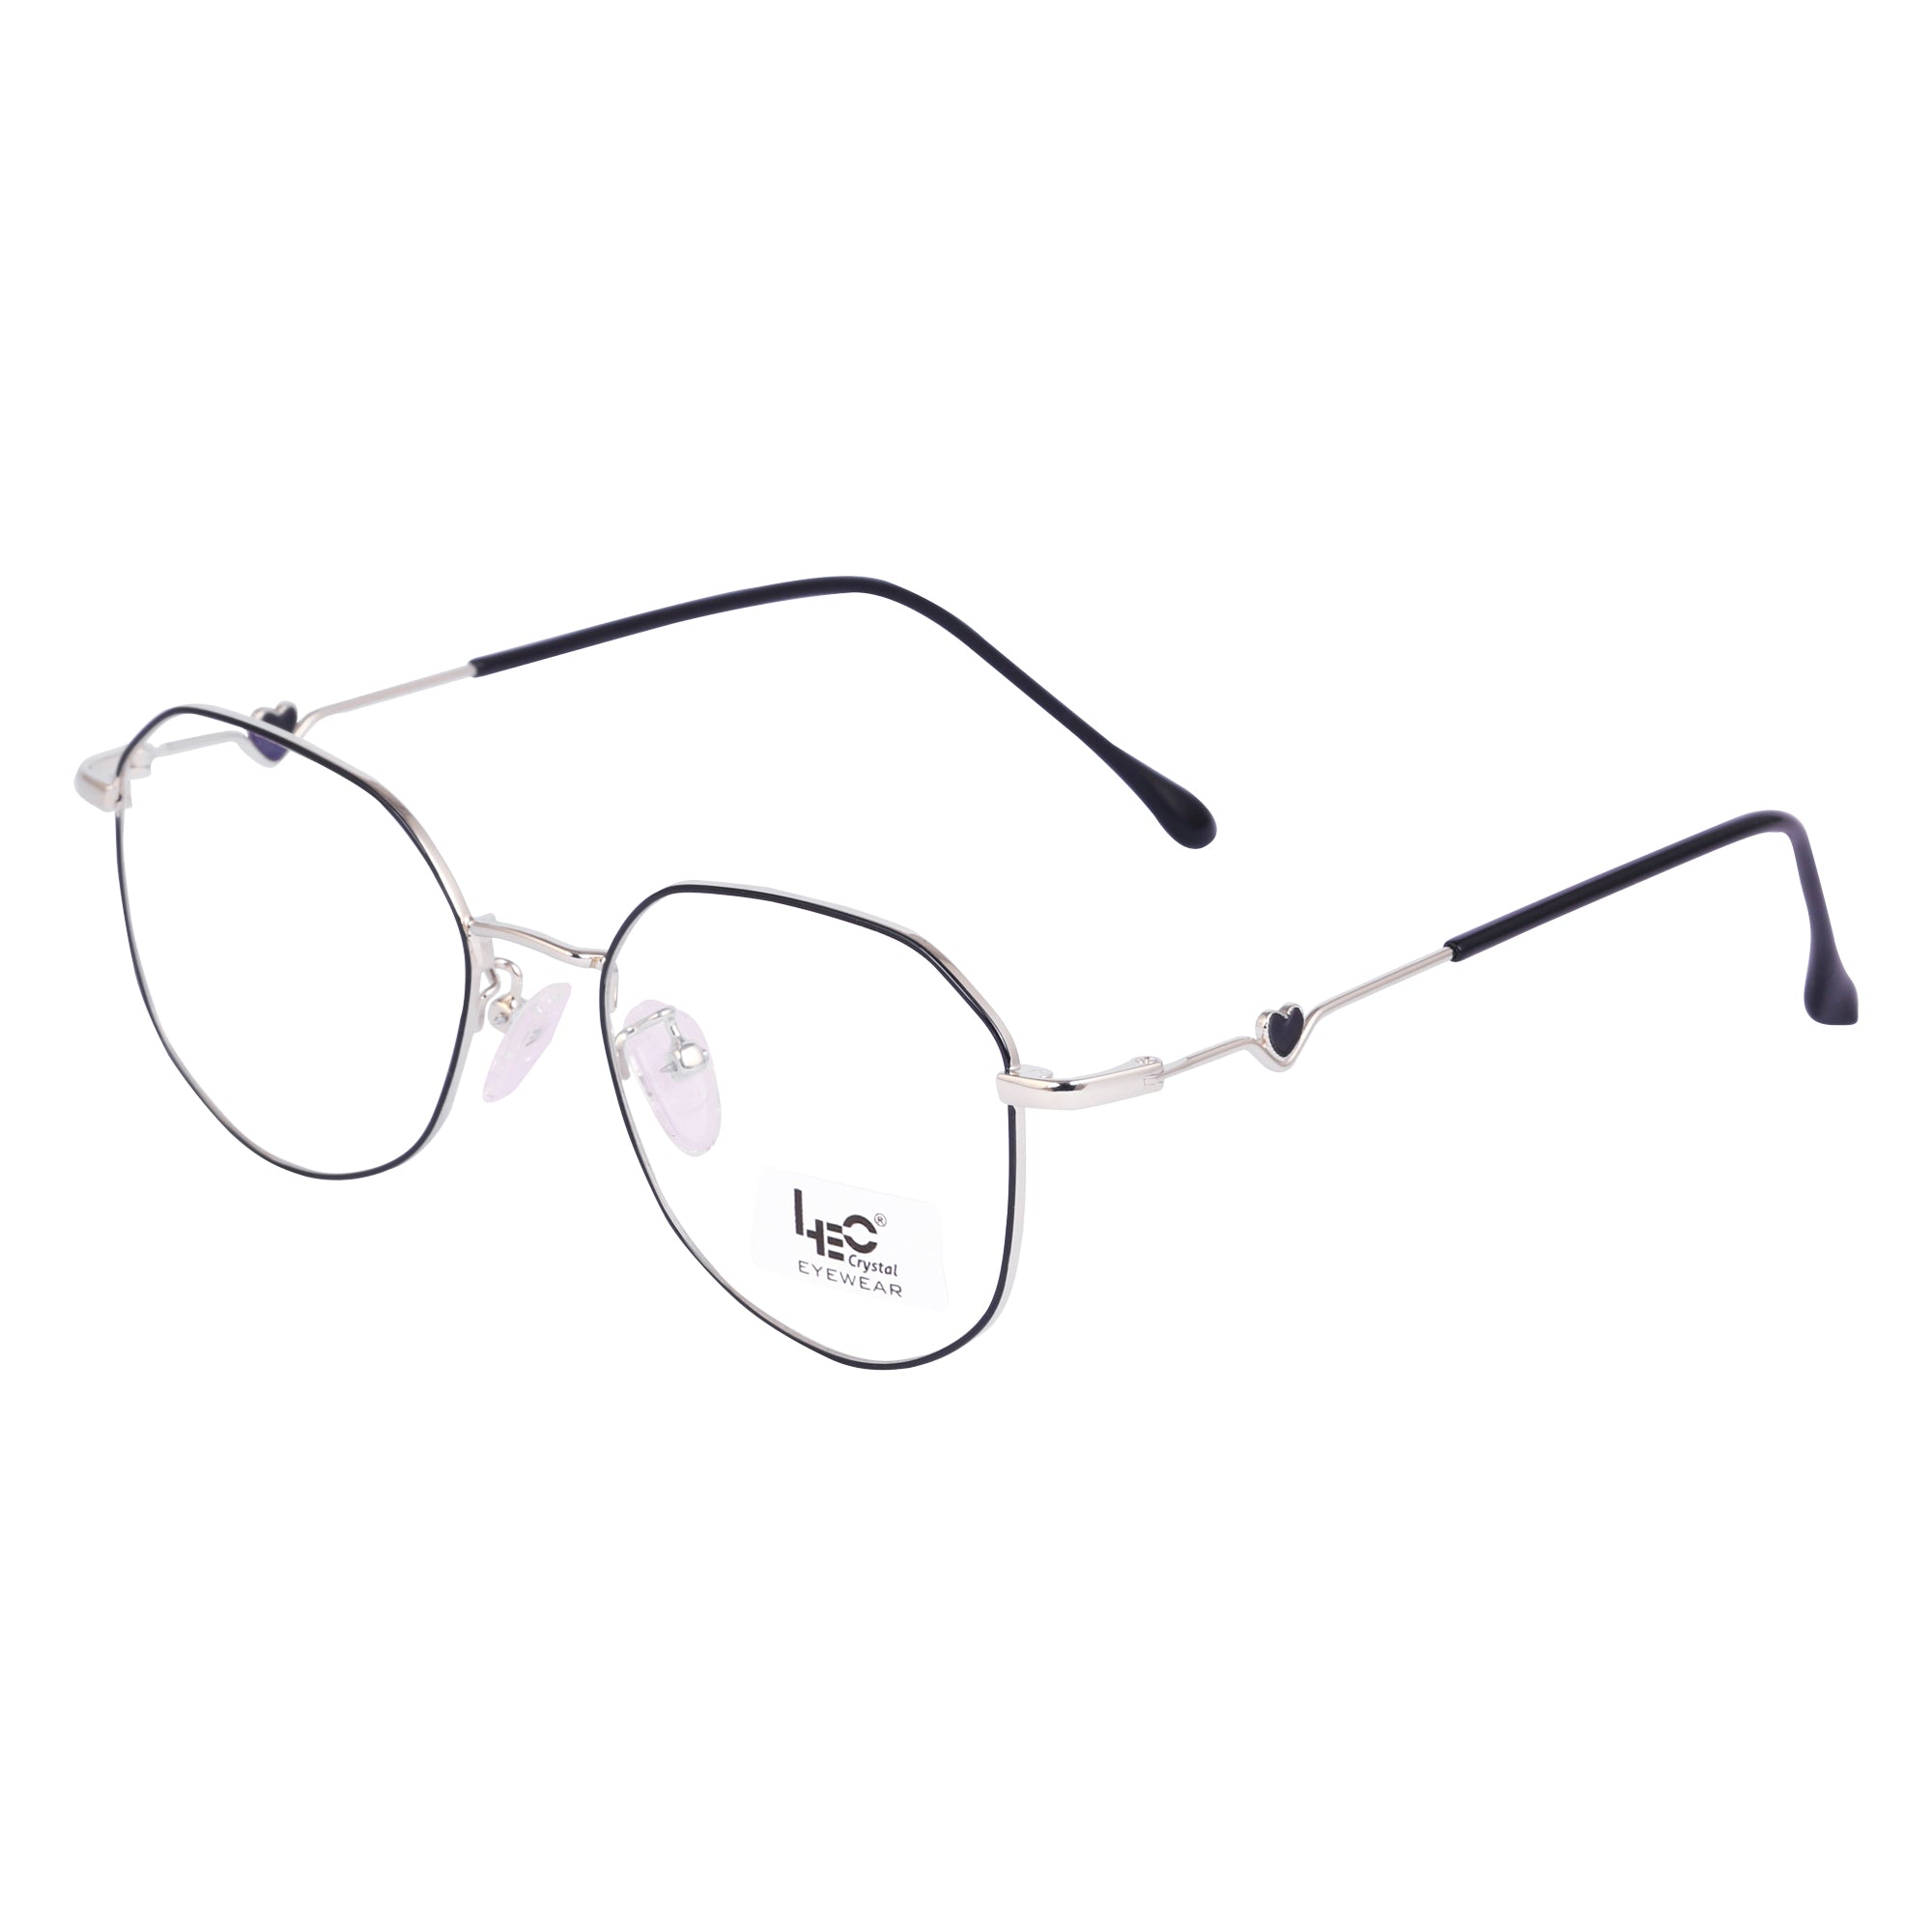 Black & Silver Rimmed Hexagon Metal Eyeglasses - L35007